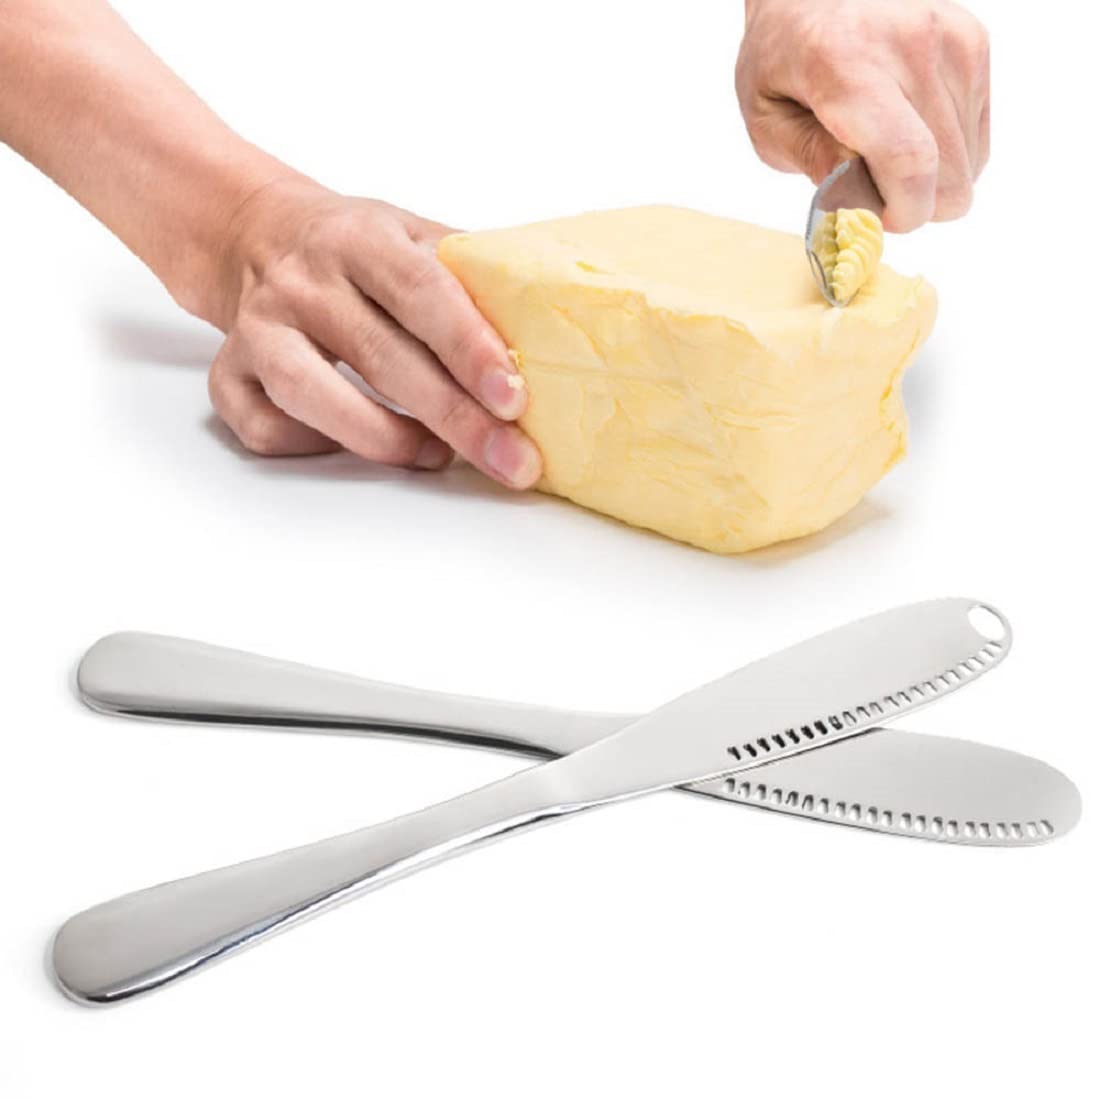 Stainless steel butter knife curler 2